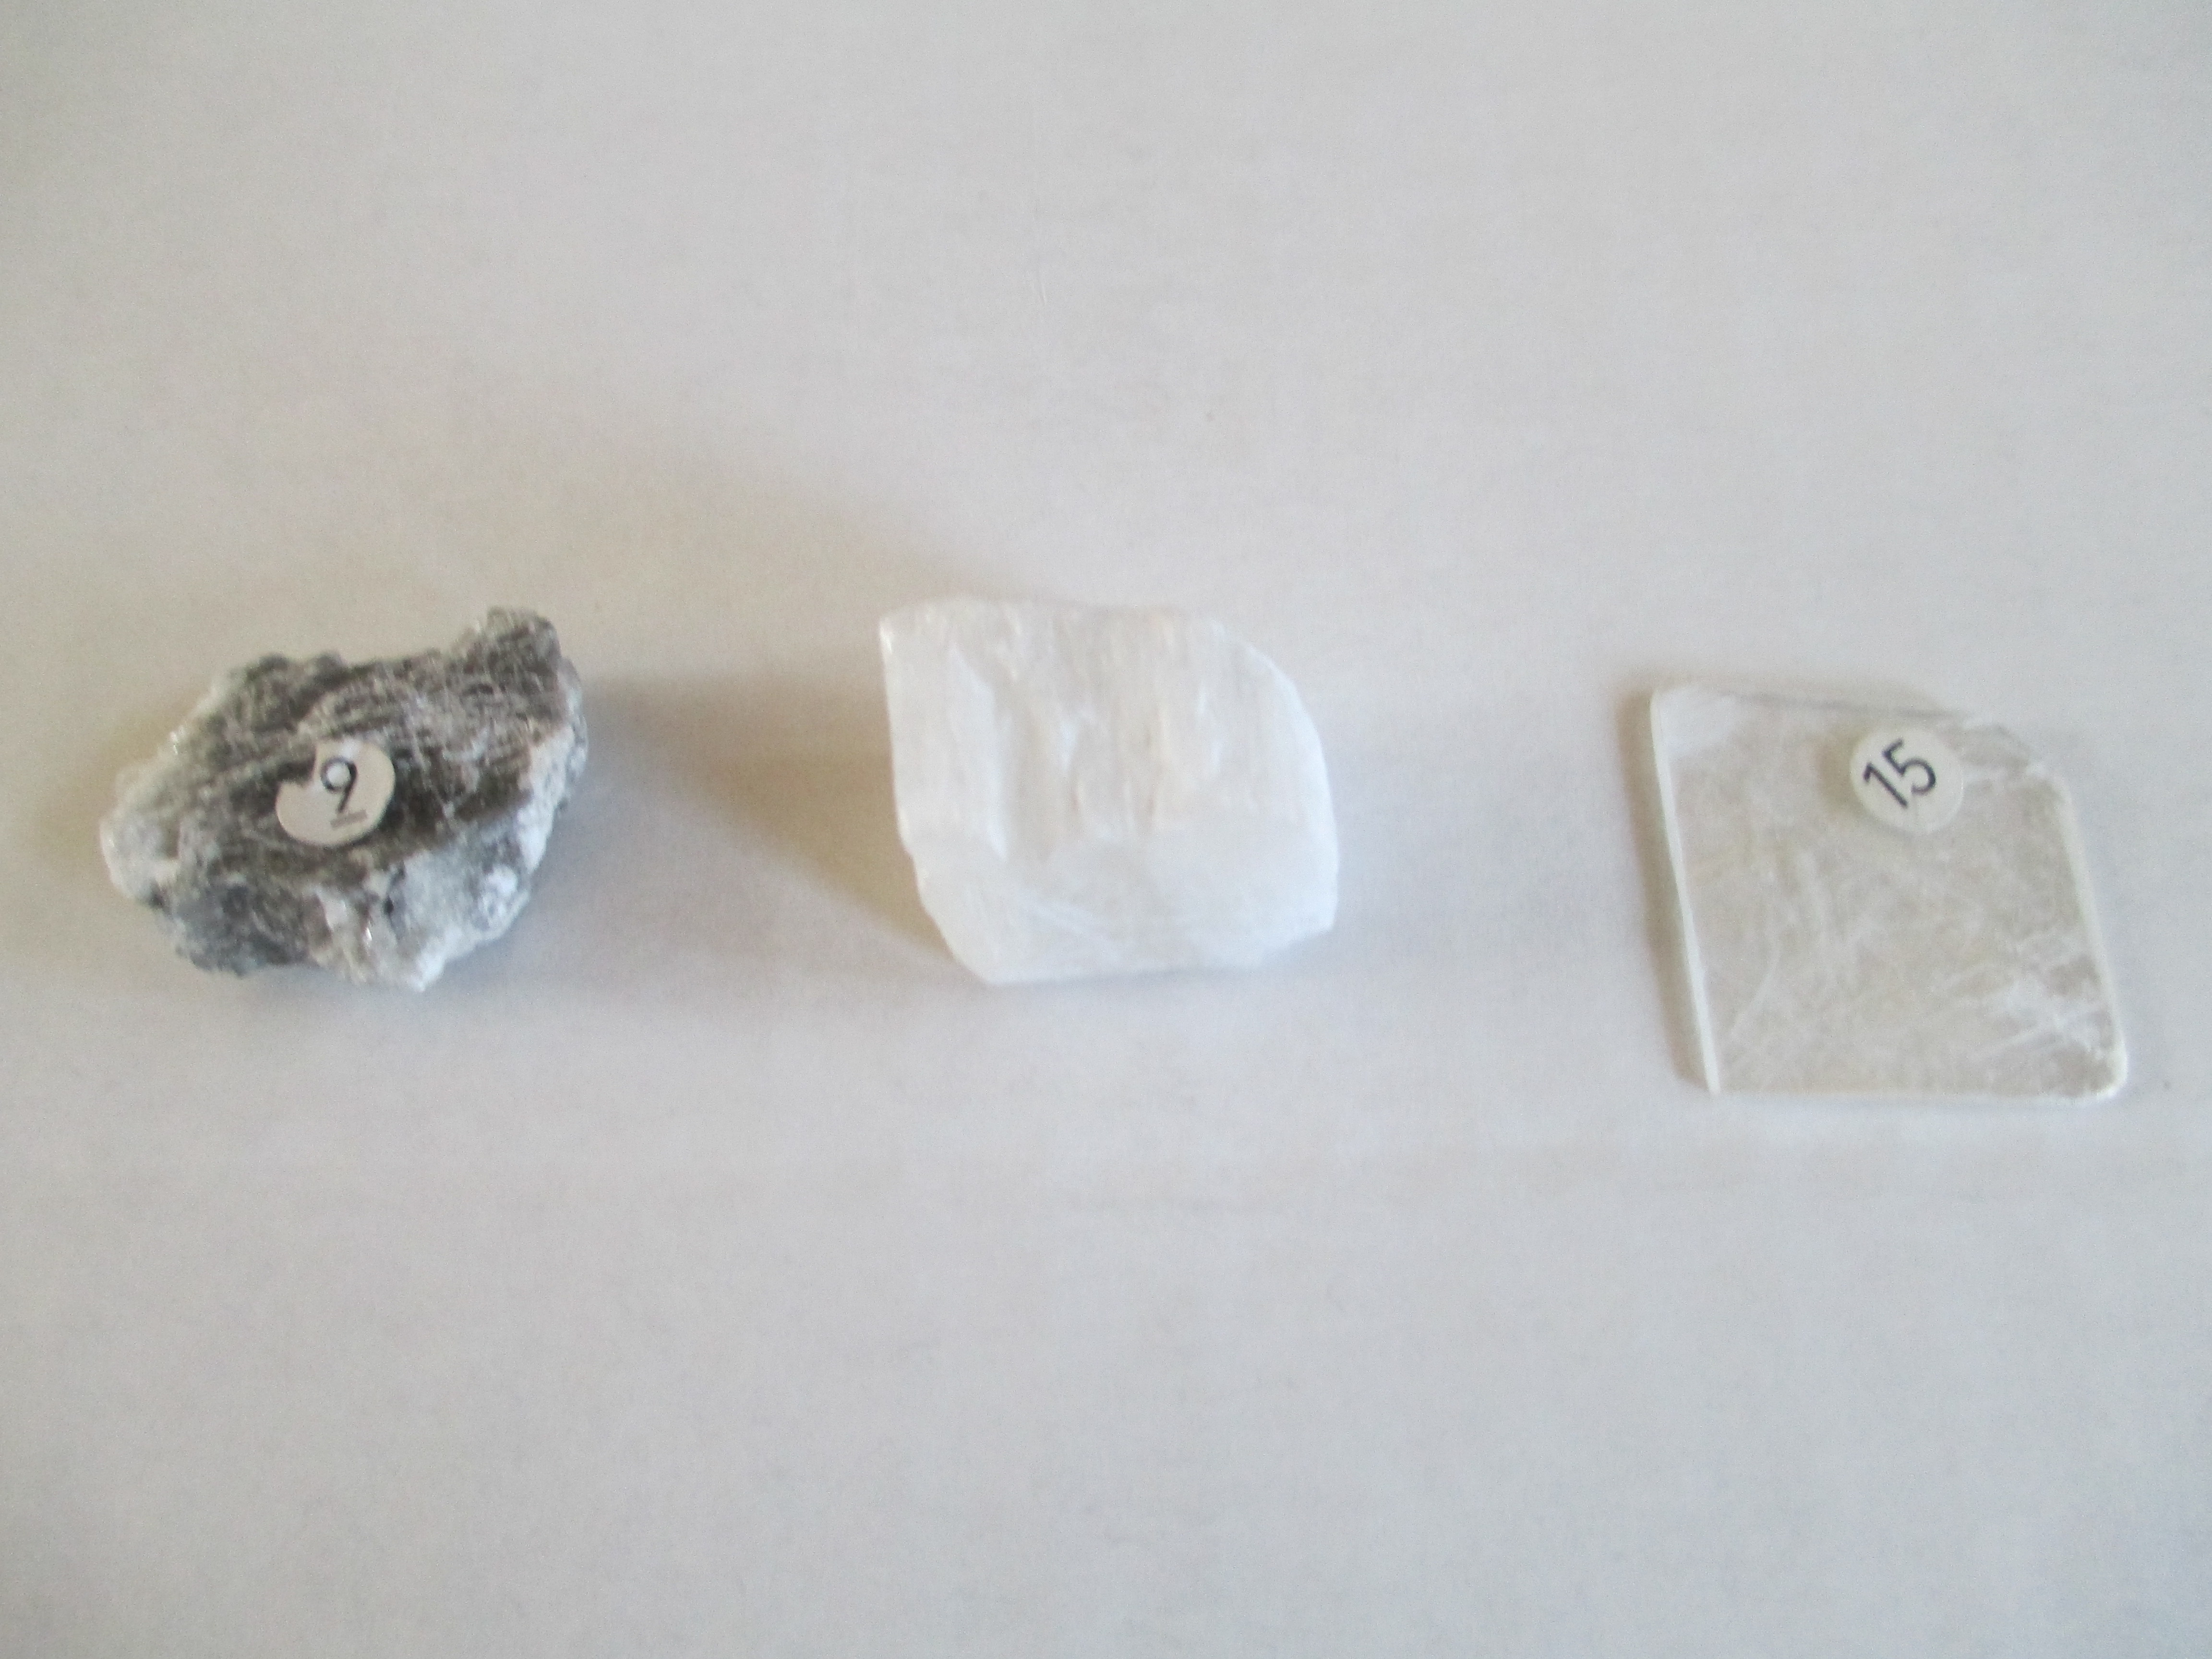 Three types of Gypsum:  Alabaster Gypsum (left), Satin Spar Gypsum (middle), and Selenite Gypsum(right).
Click to see full image.